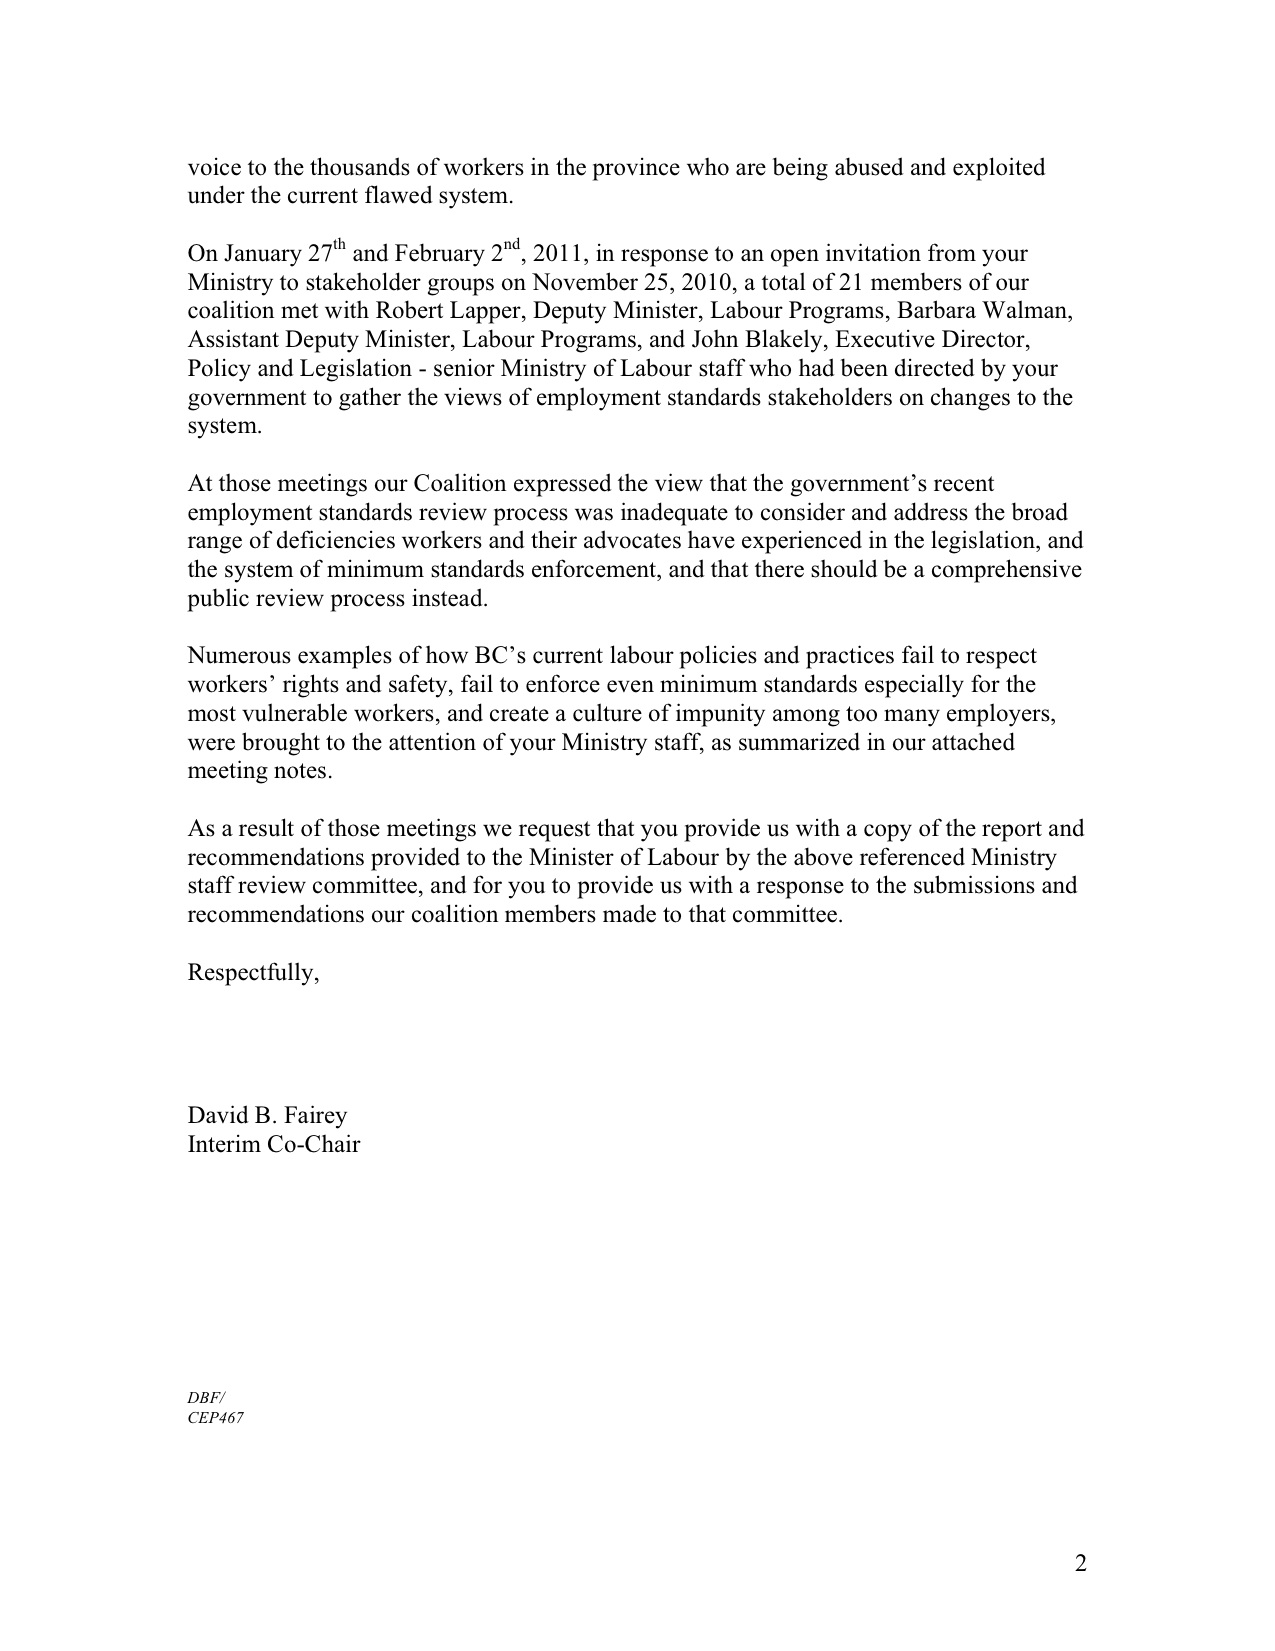 Minister Recommendation Letter Sample For Job from bcemploymentstandardscoalition.com